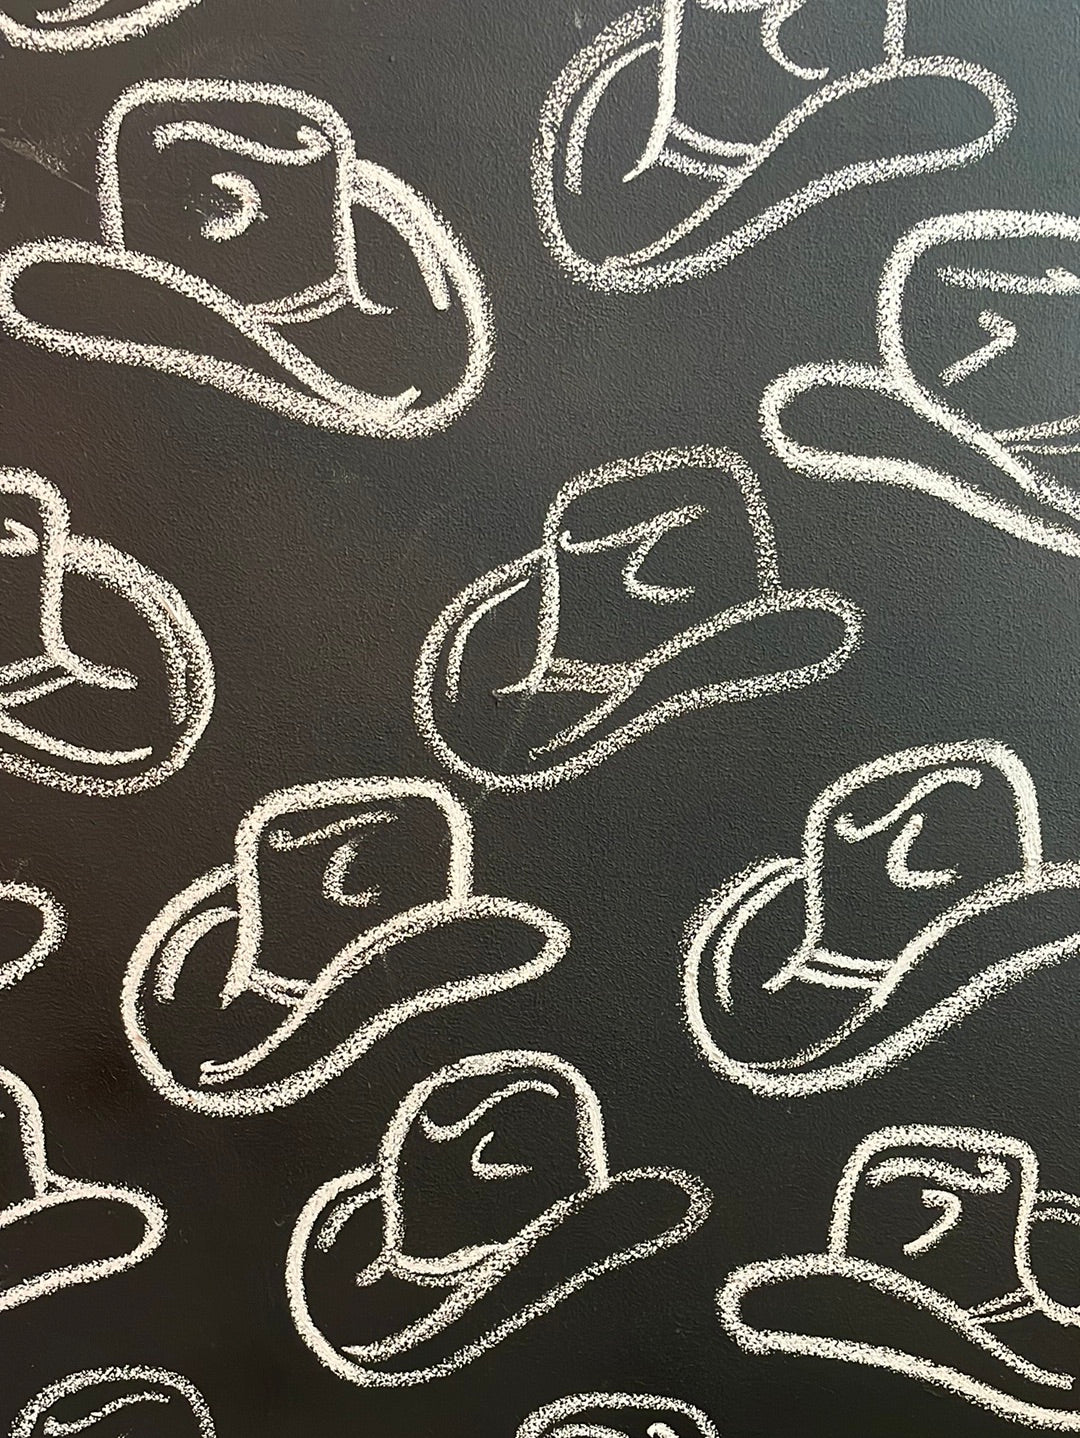 Black and White Cowboy Hat Art